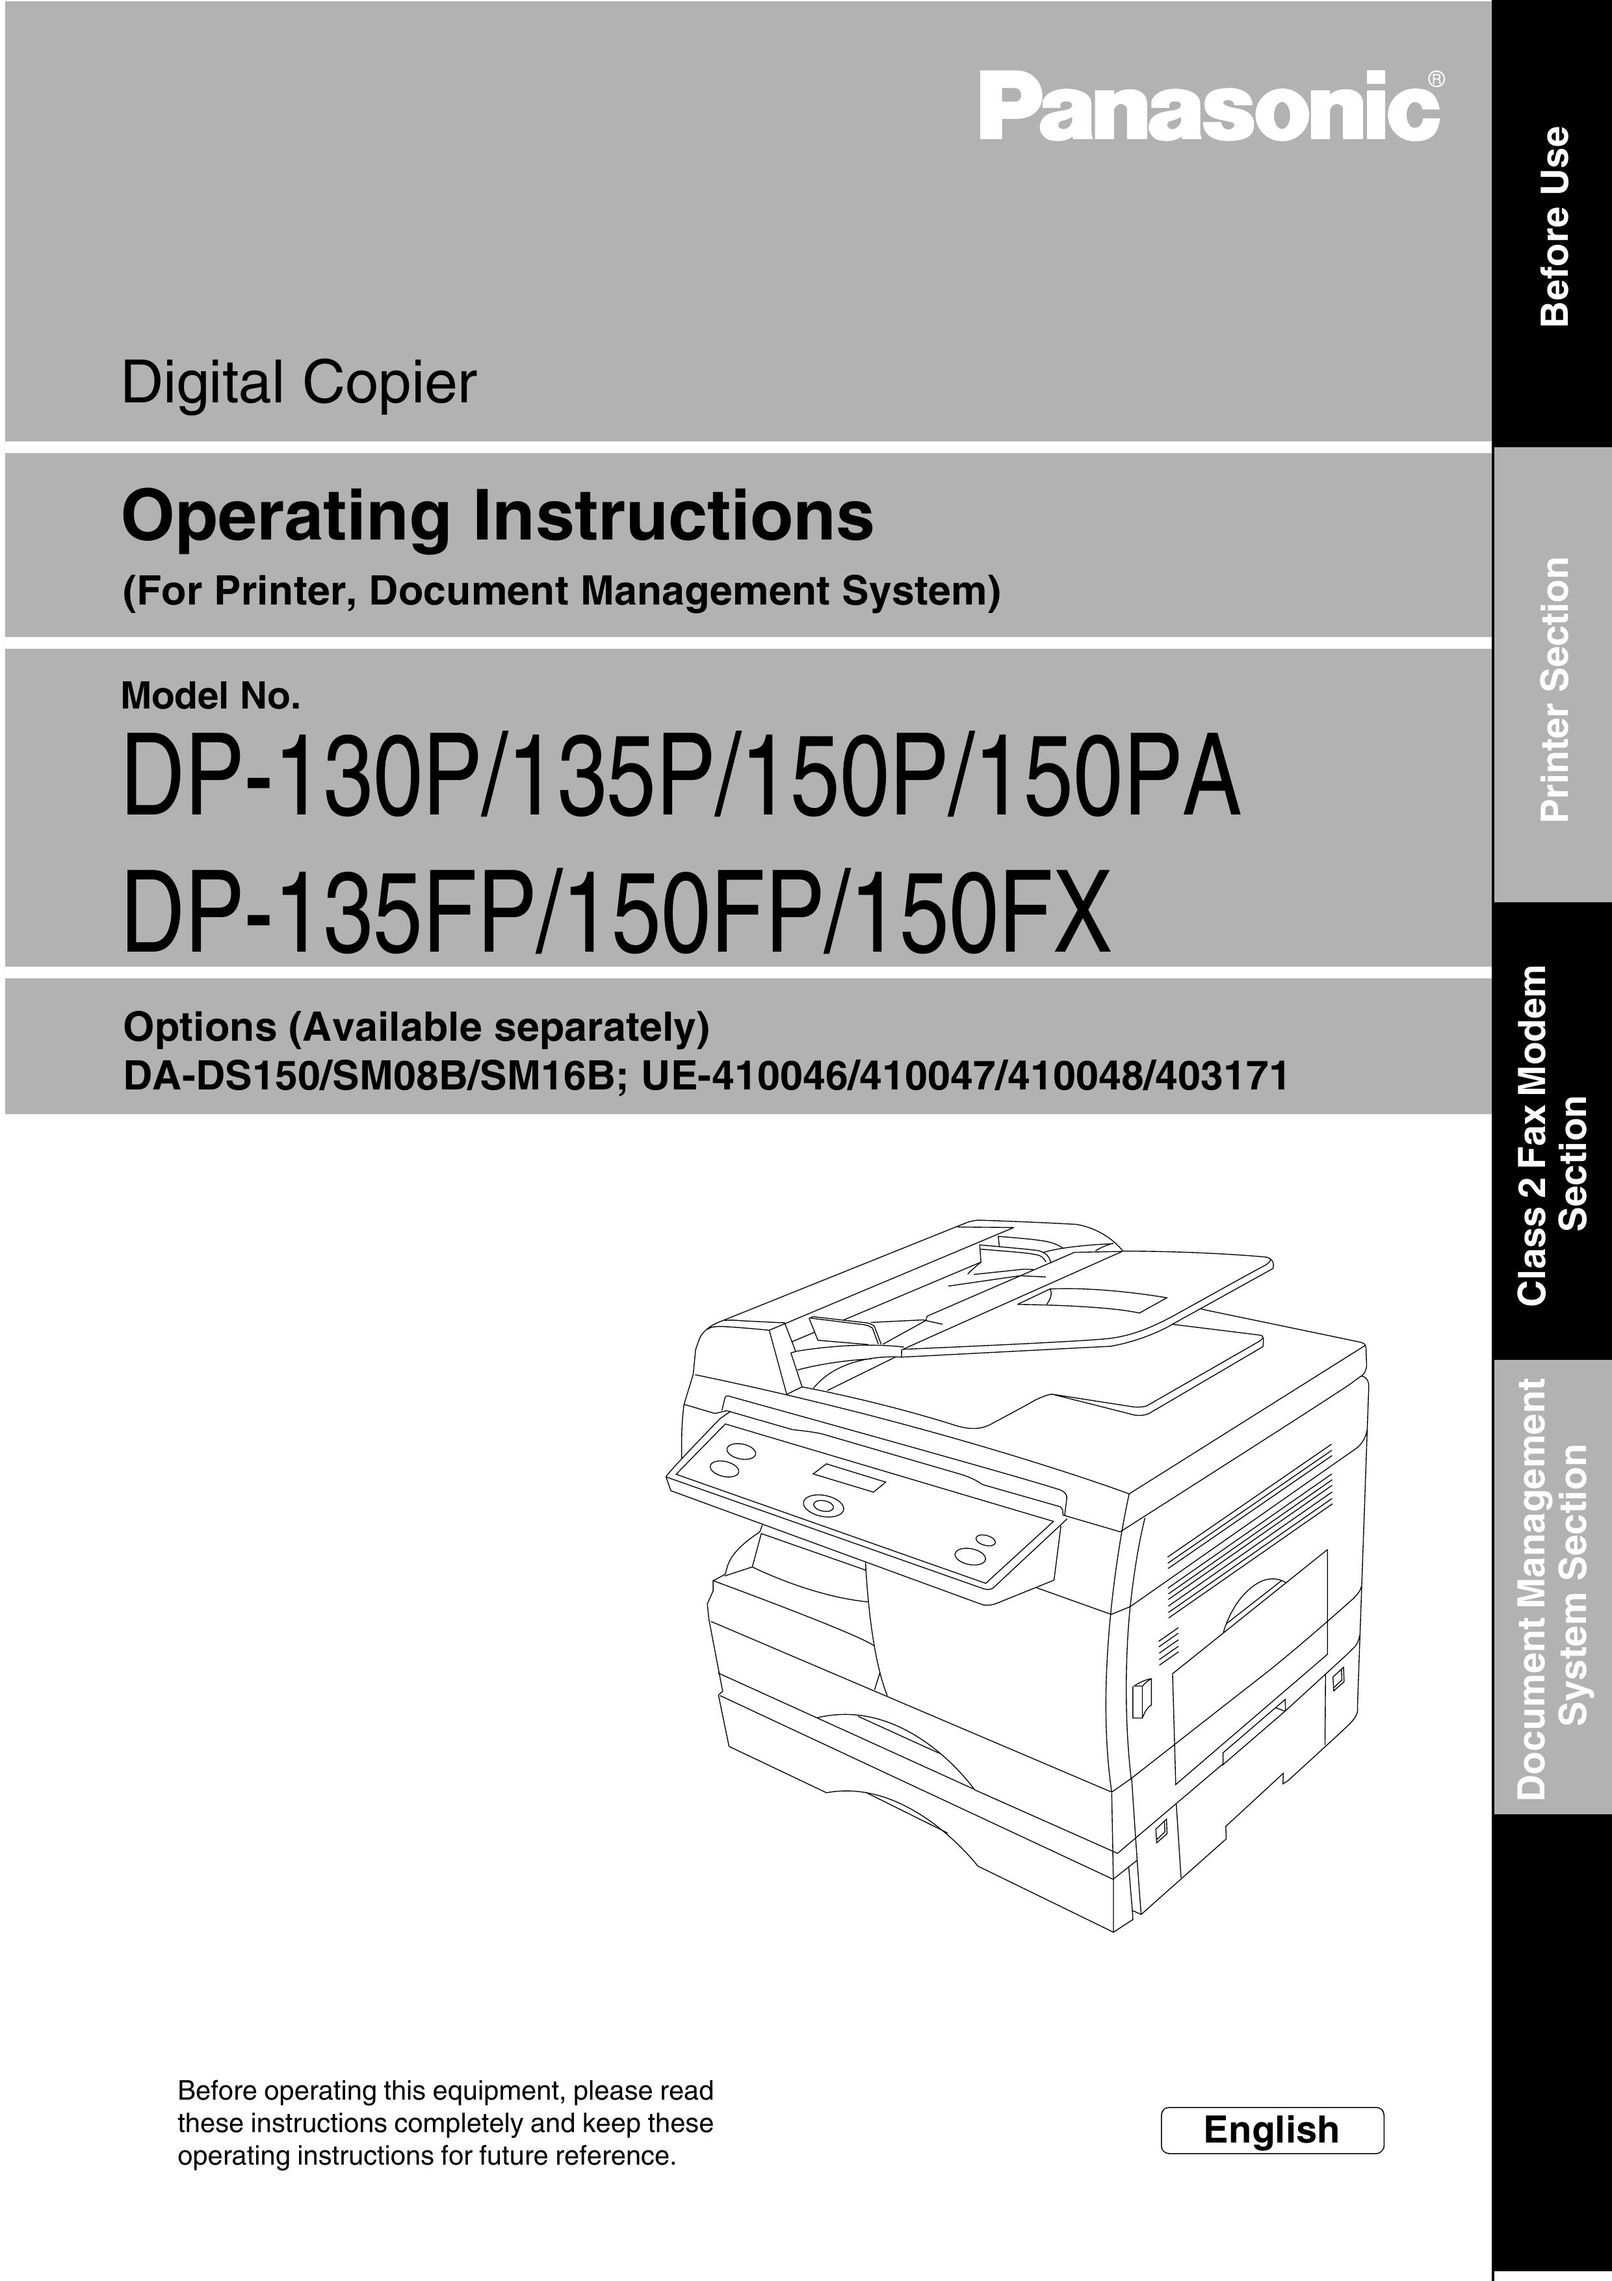 Panasonic 150FX All in One Printer User Manual